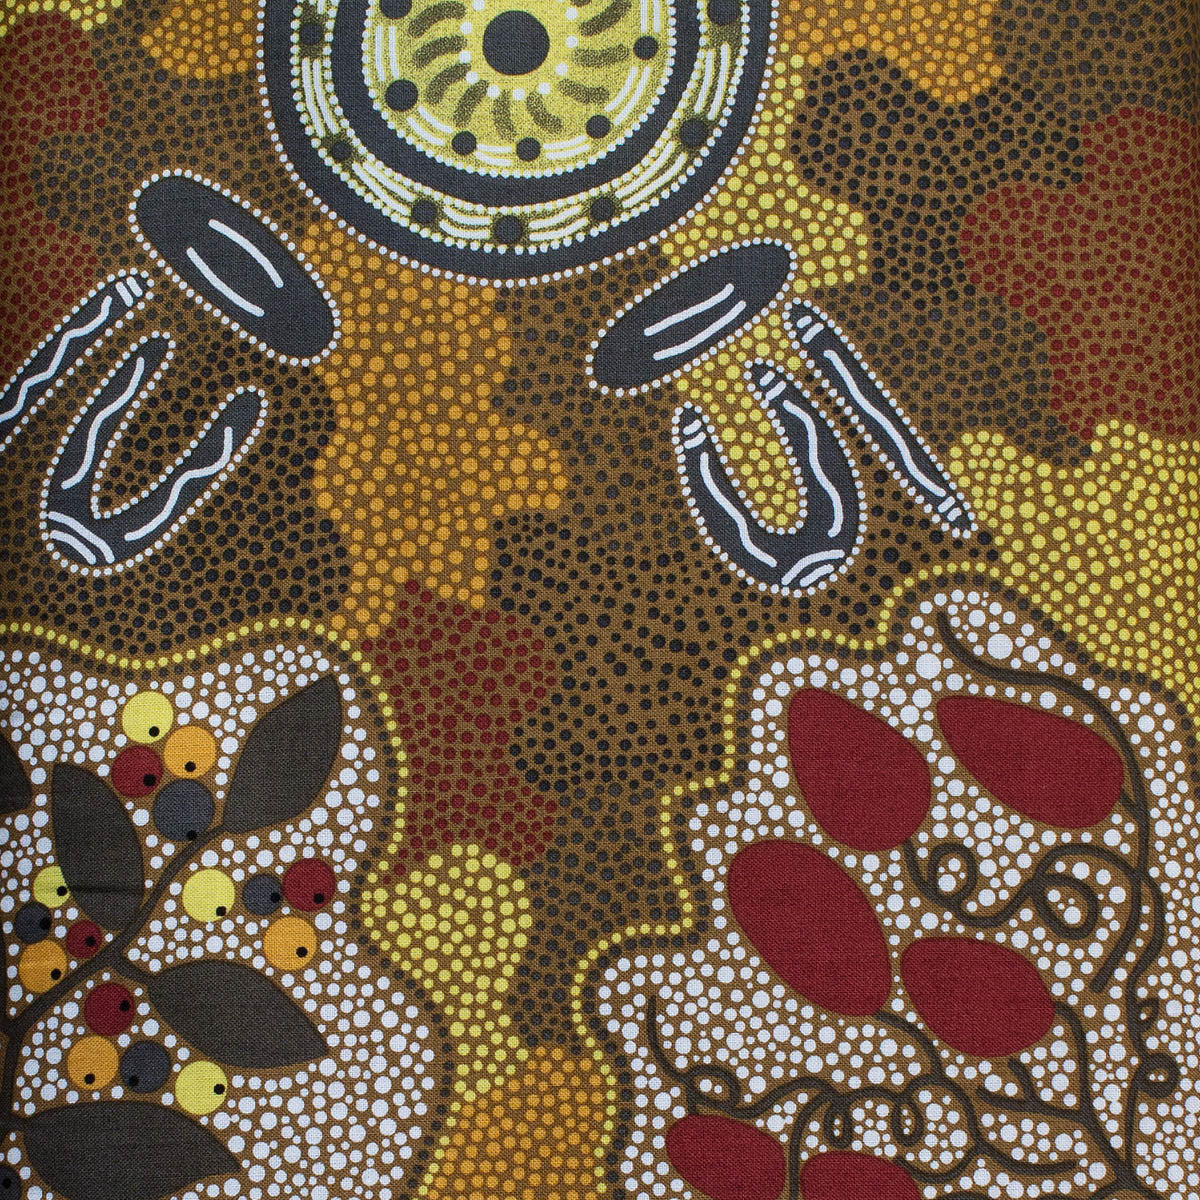 WOMEN GATHERING BUSH TUCKER BROWN by Aboriginal Artist Bernadine Johnson